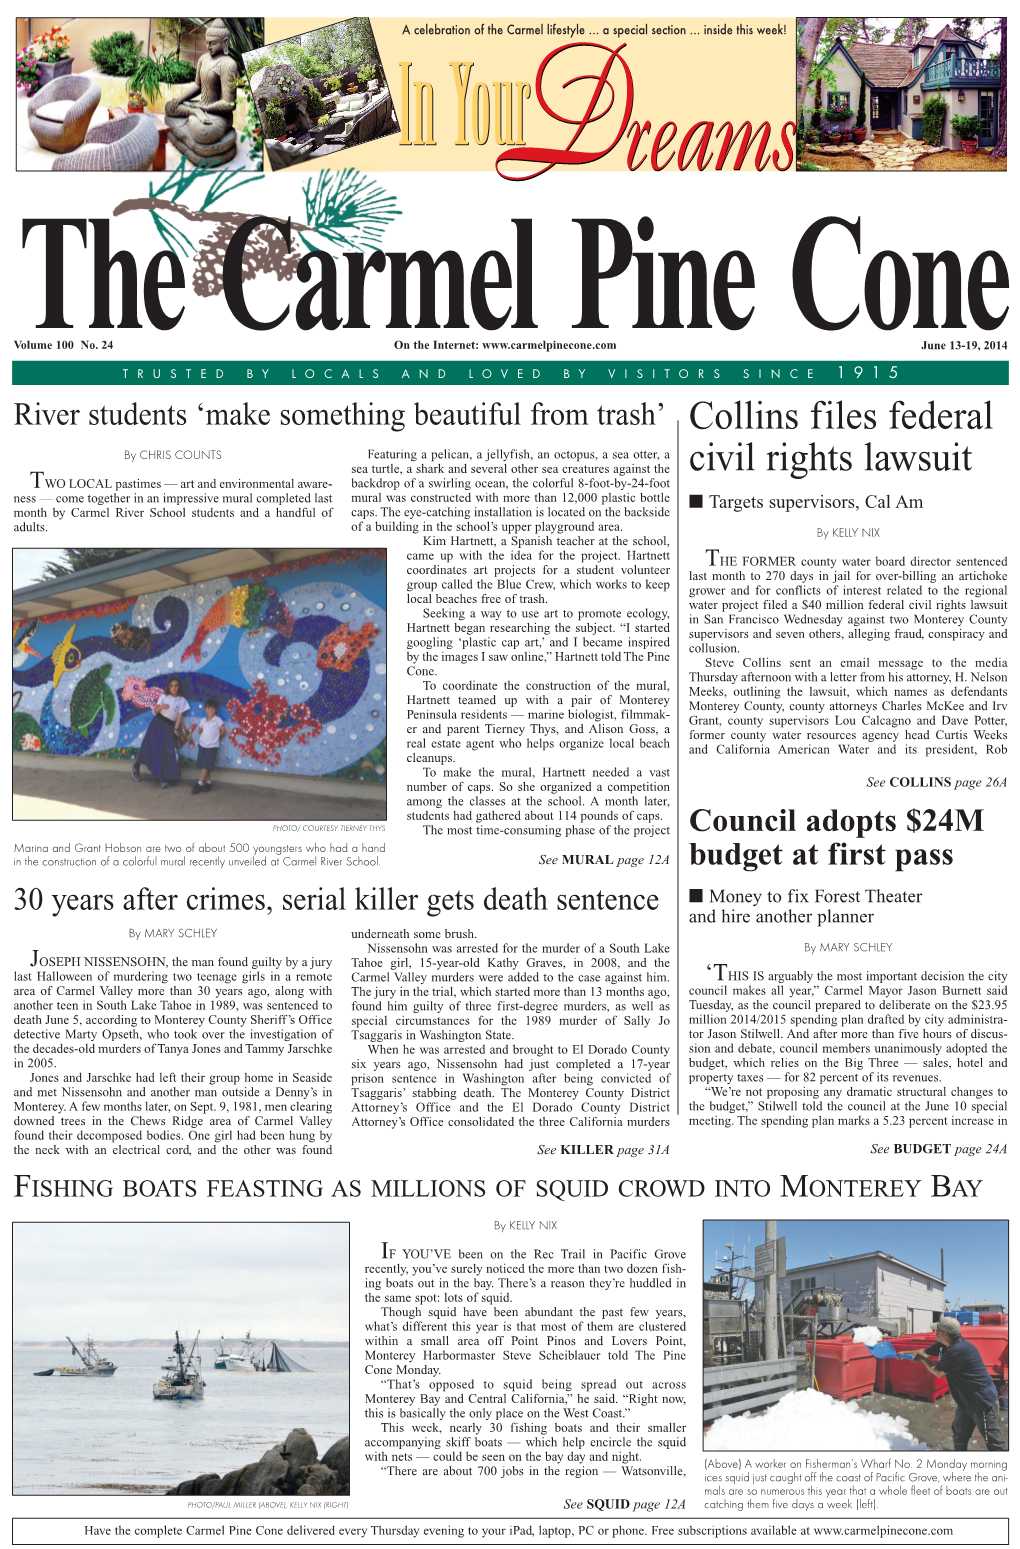 Carmel Pine Cone, June 13, 2014 (Main News)